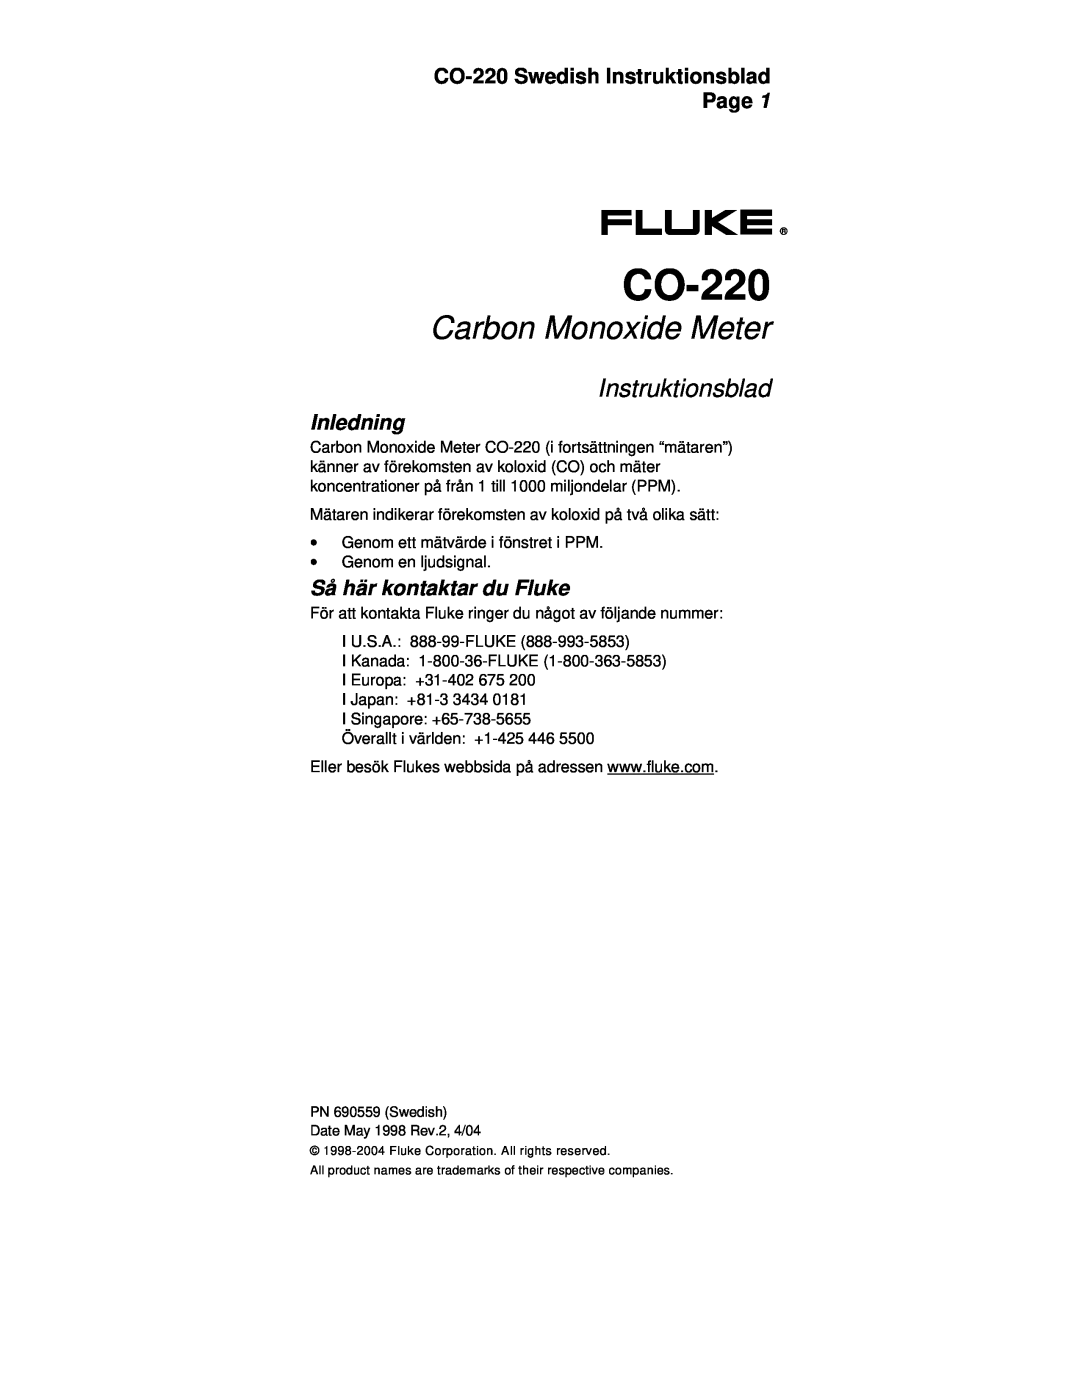 Fluke manual CO-220Swedish Instruktionsblad Page, Inledning, Så här kontaktar du Fluke, Carbon Monoxide Meter 